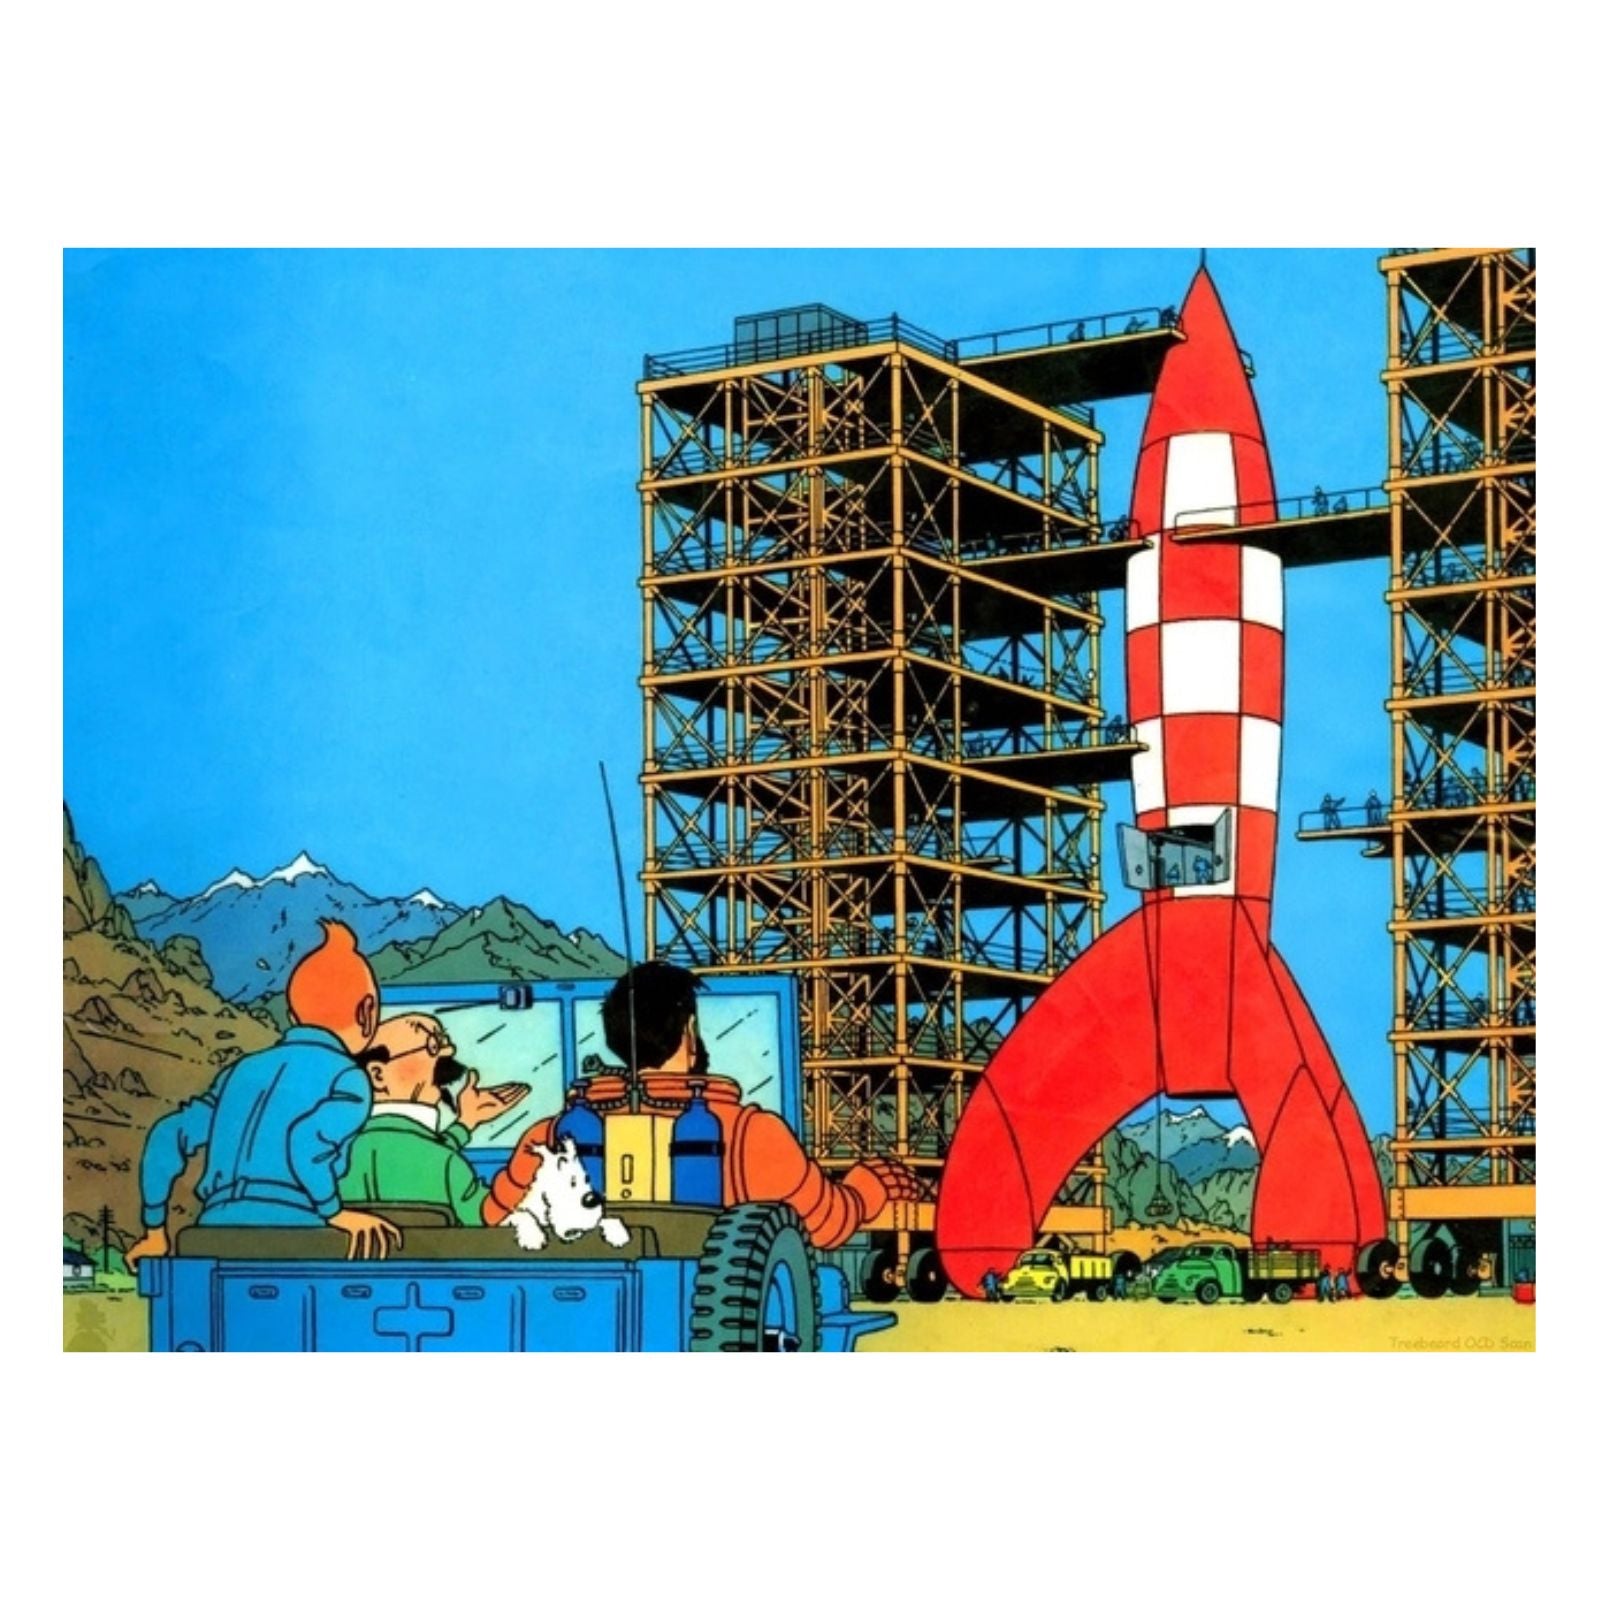 Fusée Tintin  Tintin, Graphic design images, Illustration